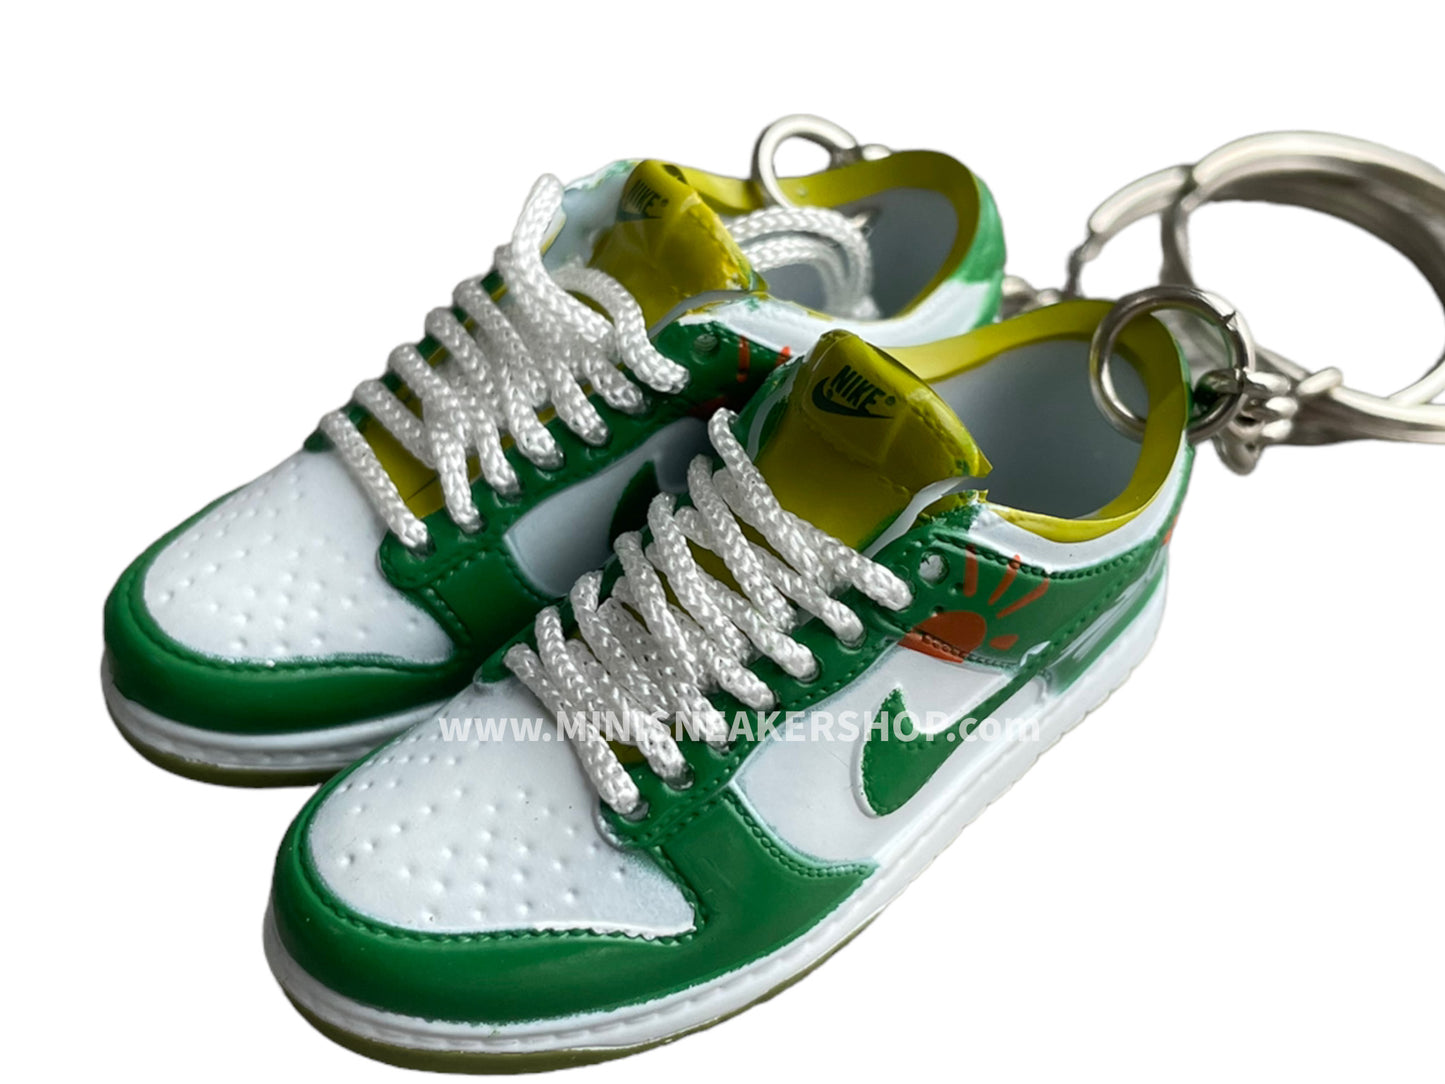 Mini sneaker keychain 3D Dunk - 2 green tones